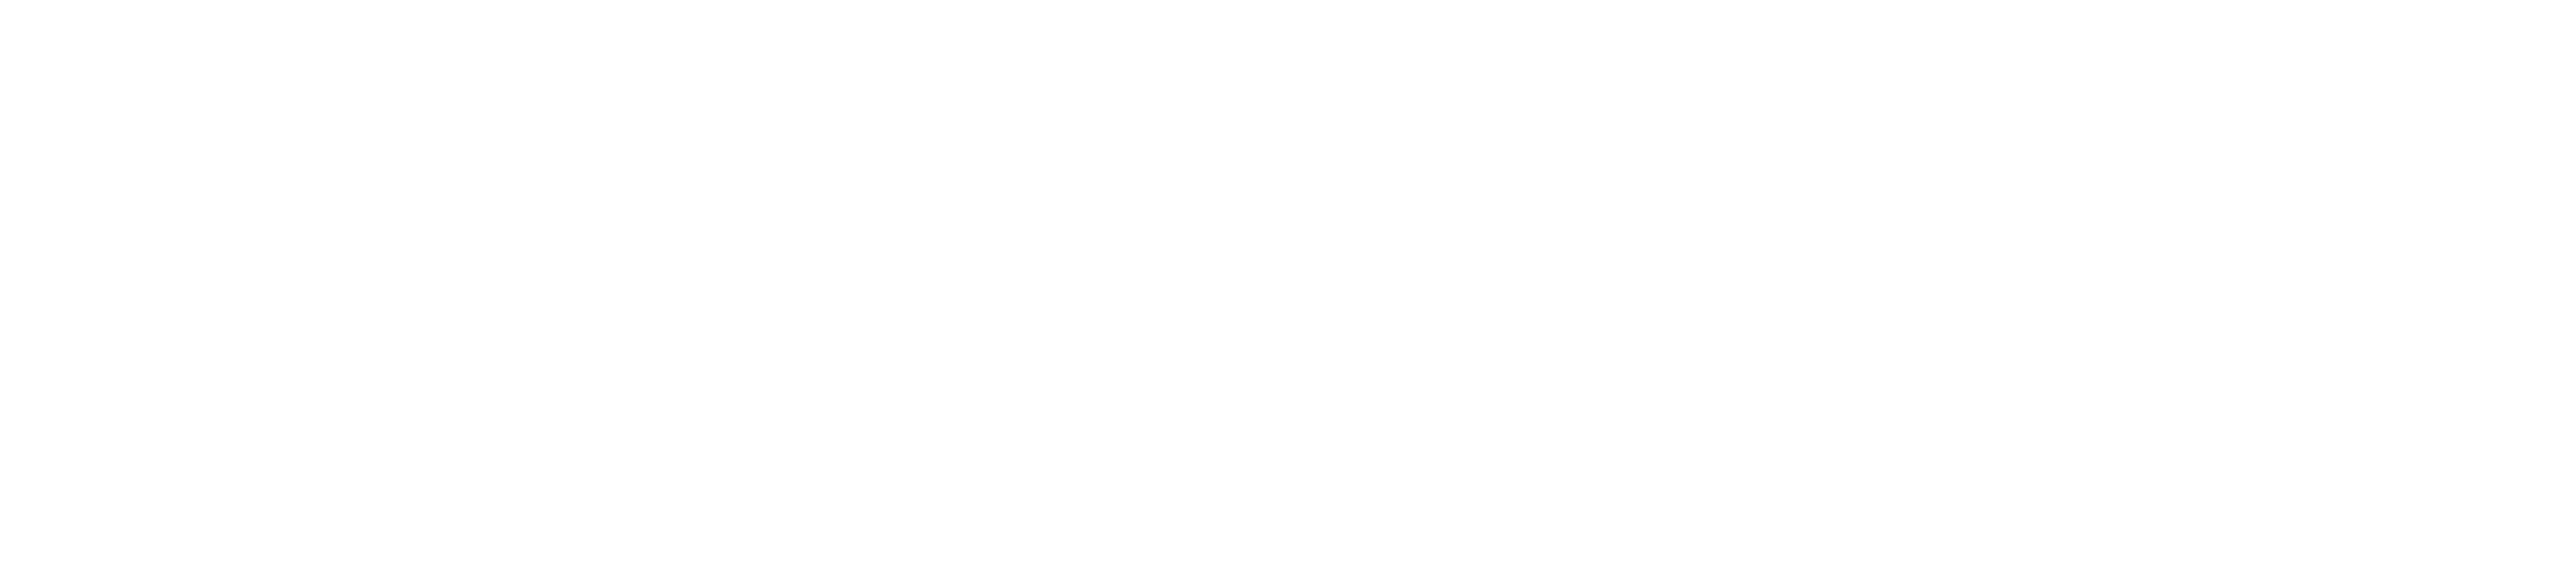 Quick Pay DMV Registration Services